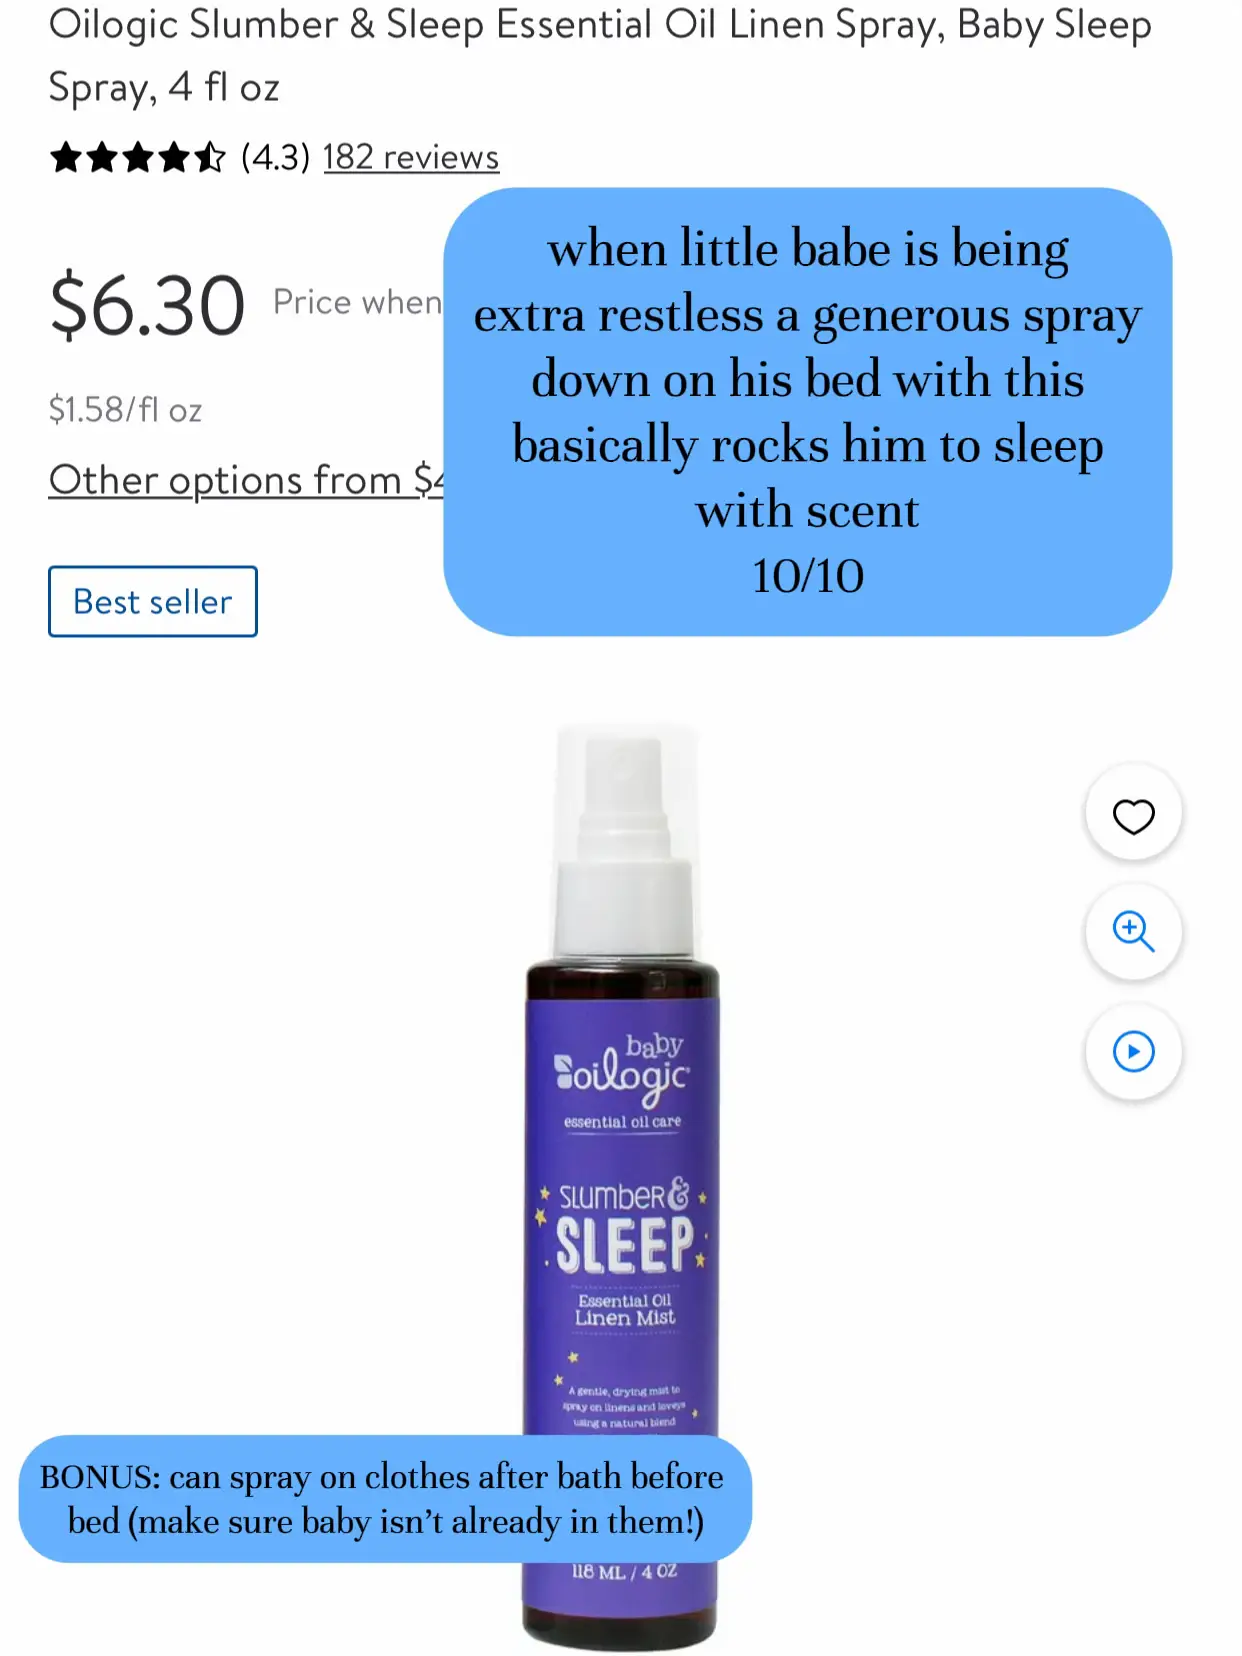  A bottle of Oilogic Slumber & Sleep Essential Oil Linen Spray, Baby Sleep Spray, 4 fl oz 7 (4.3)